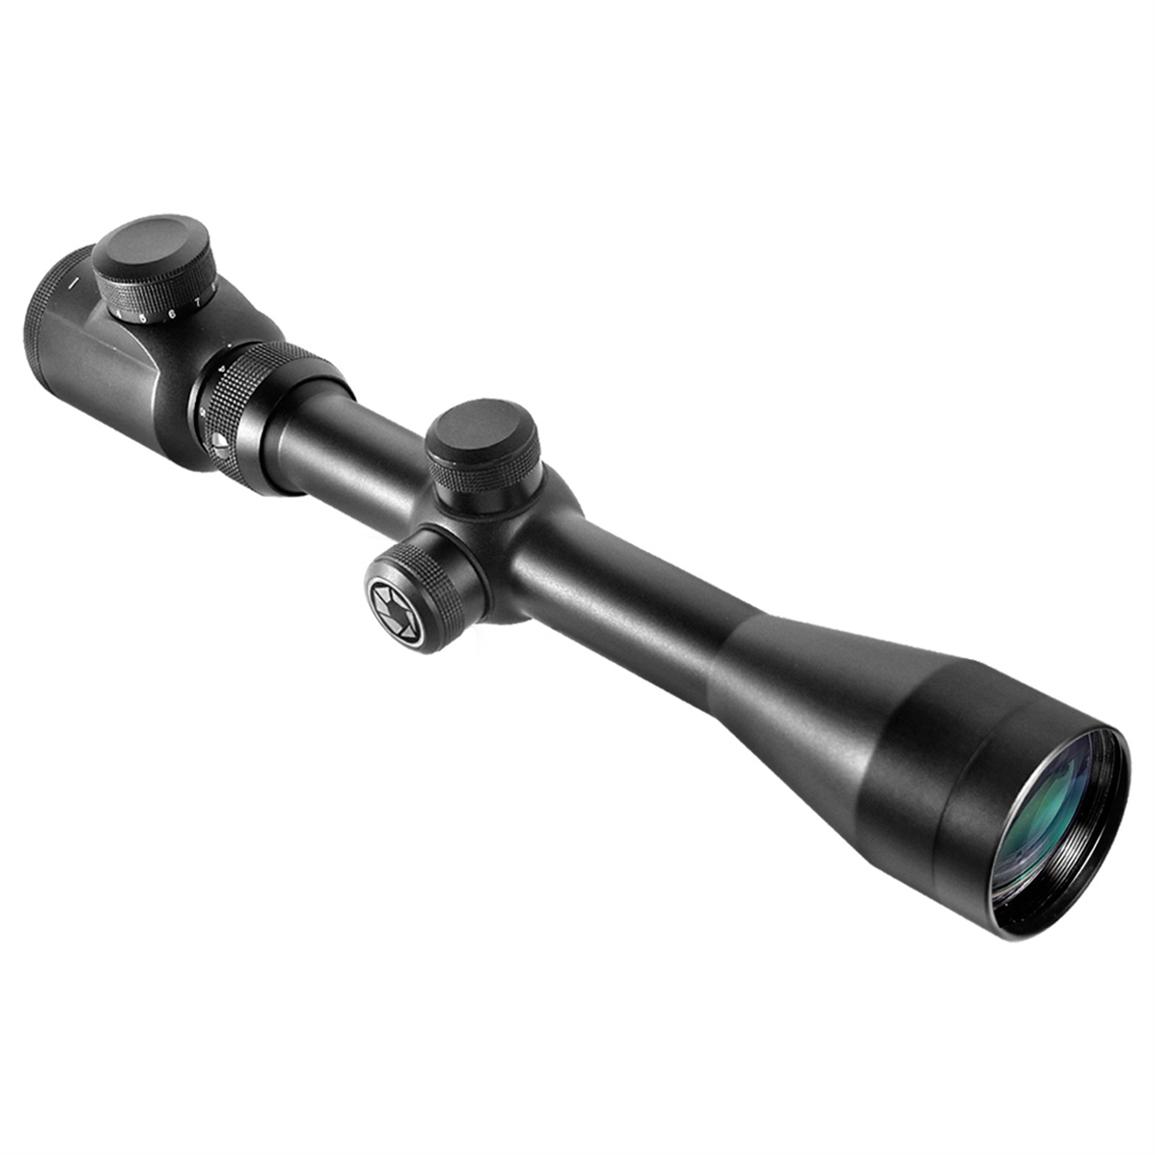 Barska Huntermaster Pro 3-9x40 mm IR Riflescope